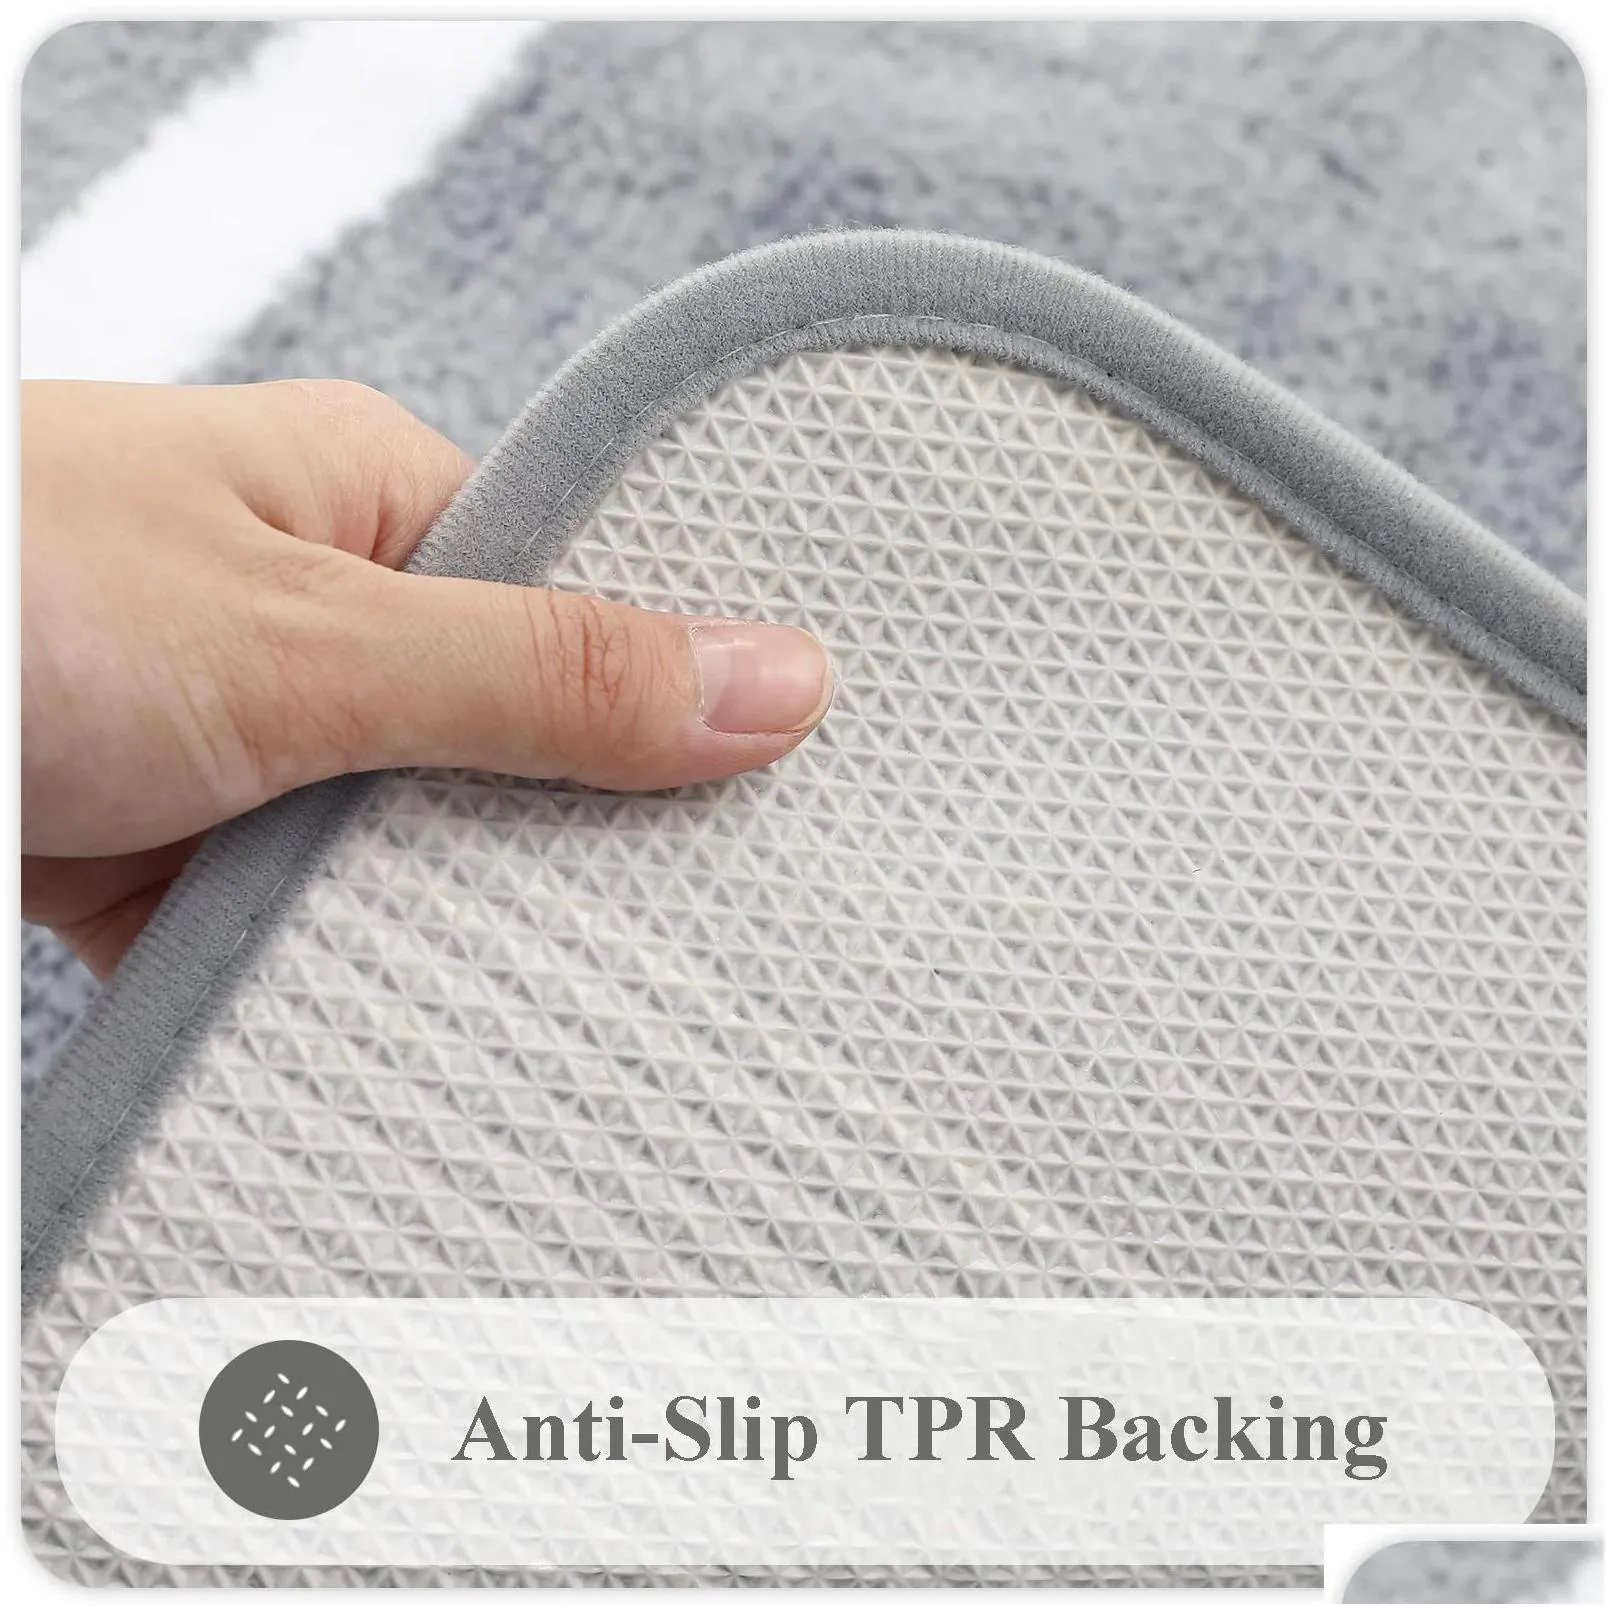 olanly absorbent bath mat bathroom rug shower pad non-slip bedroom foot carpet soft thick living room plush doormat floor decor 240125